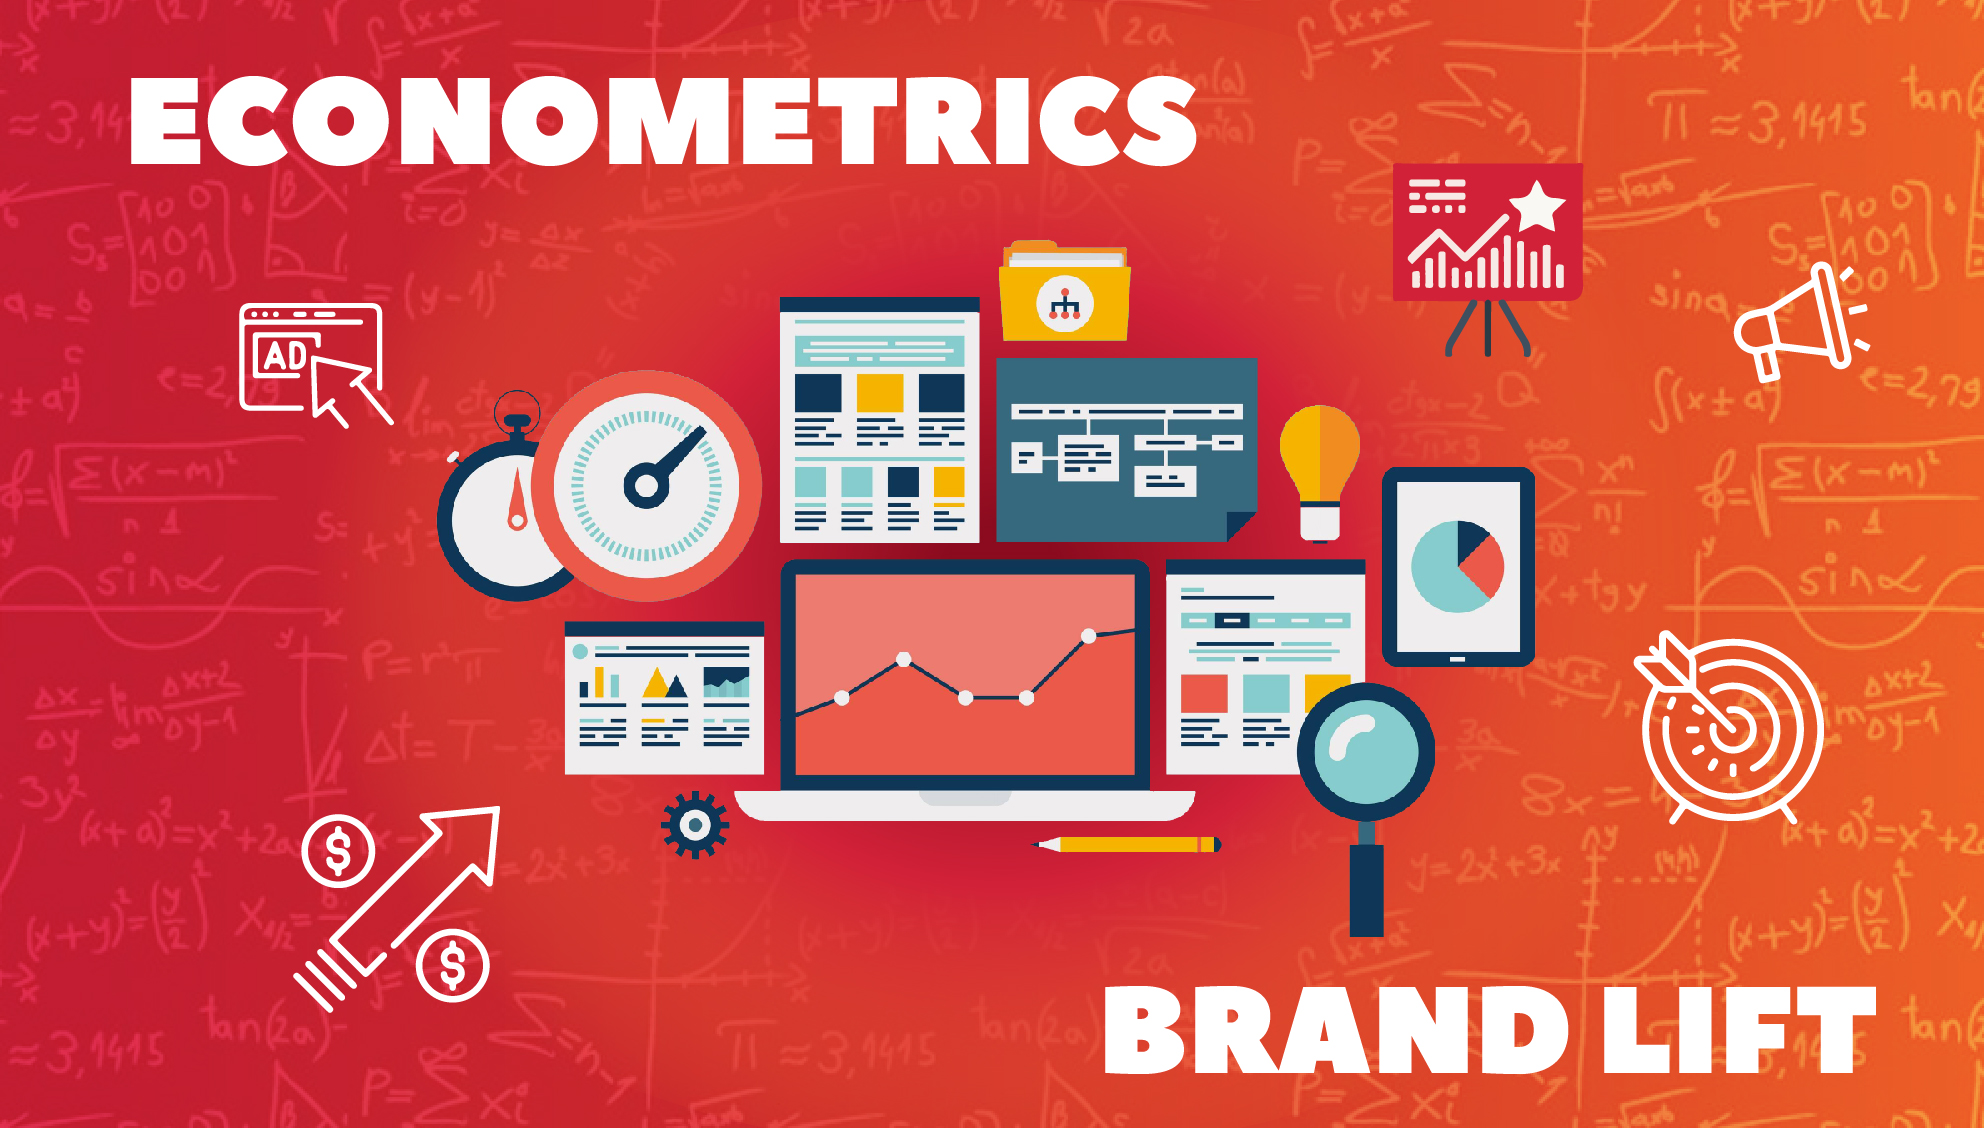 Econometrics and Brand lift